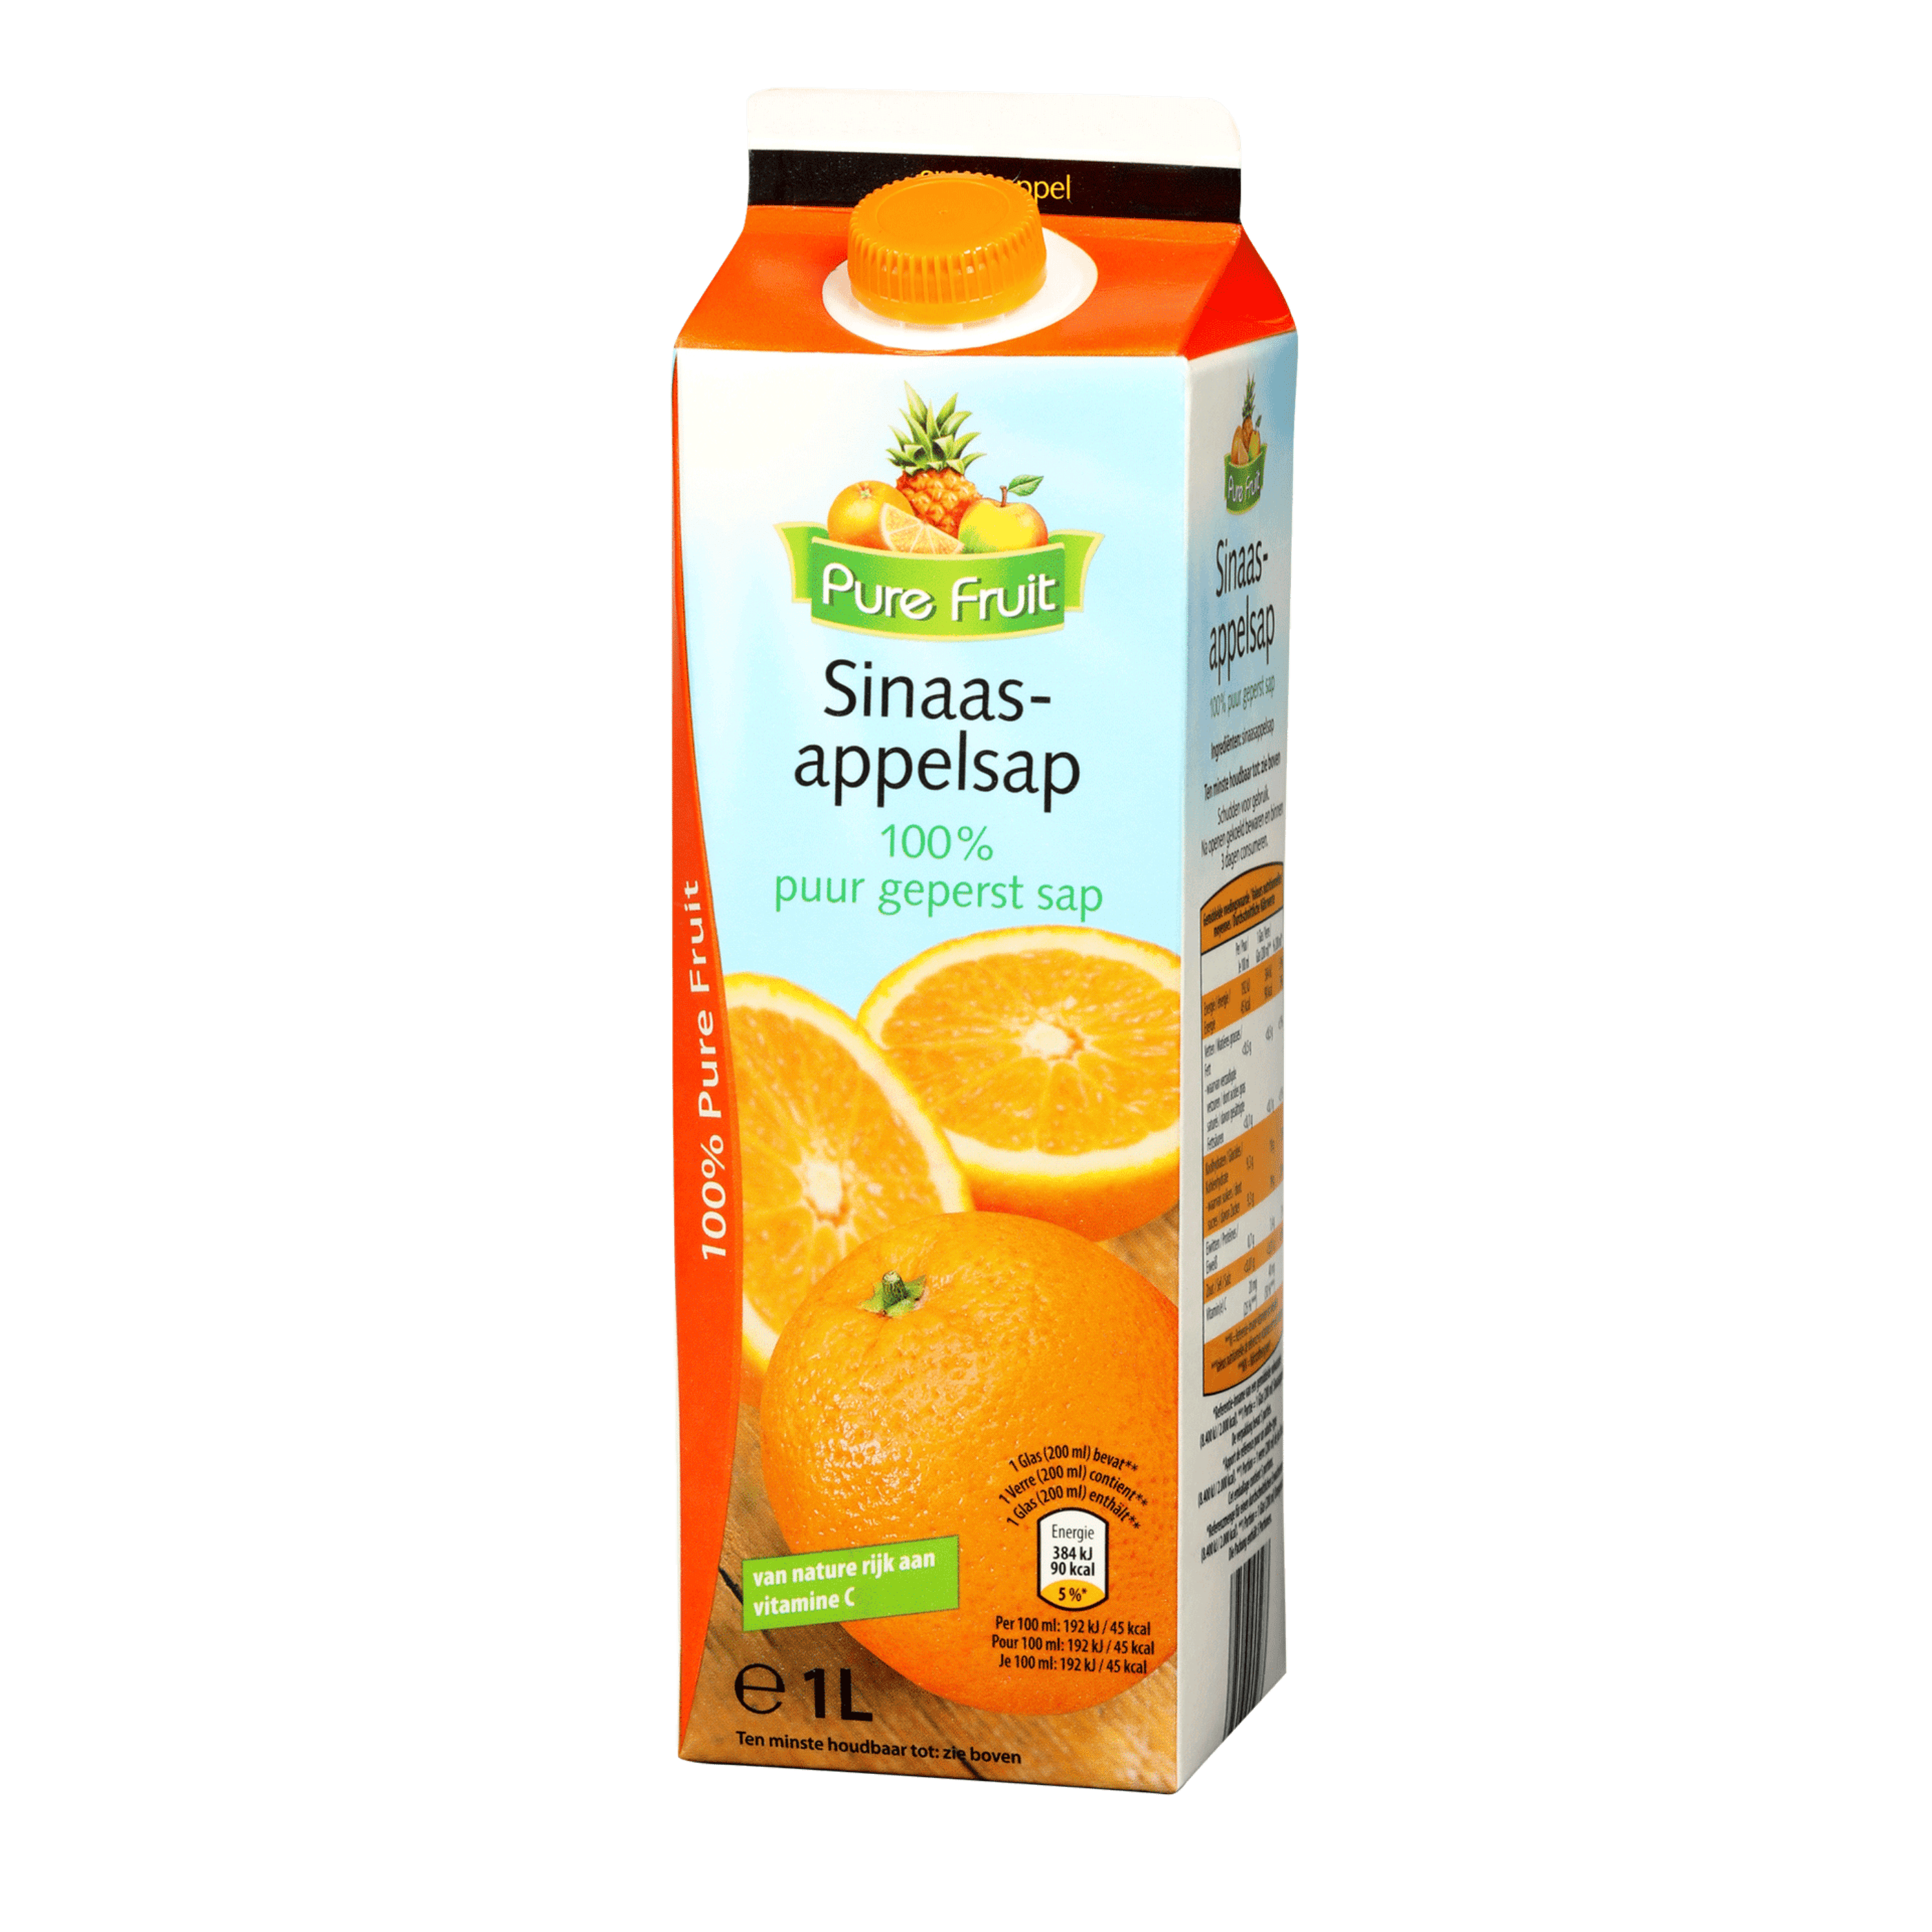 PURE FRUIT® Premium-Orangensaft günstig bei ALDI